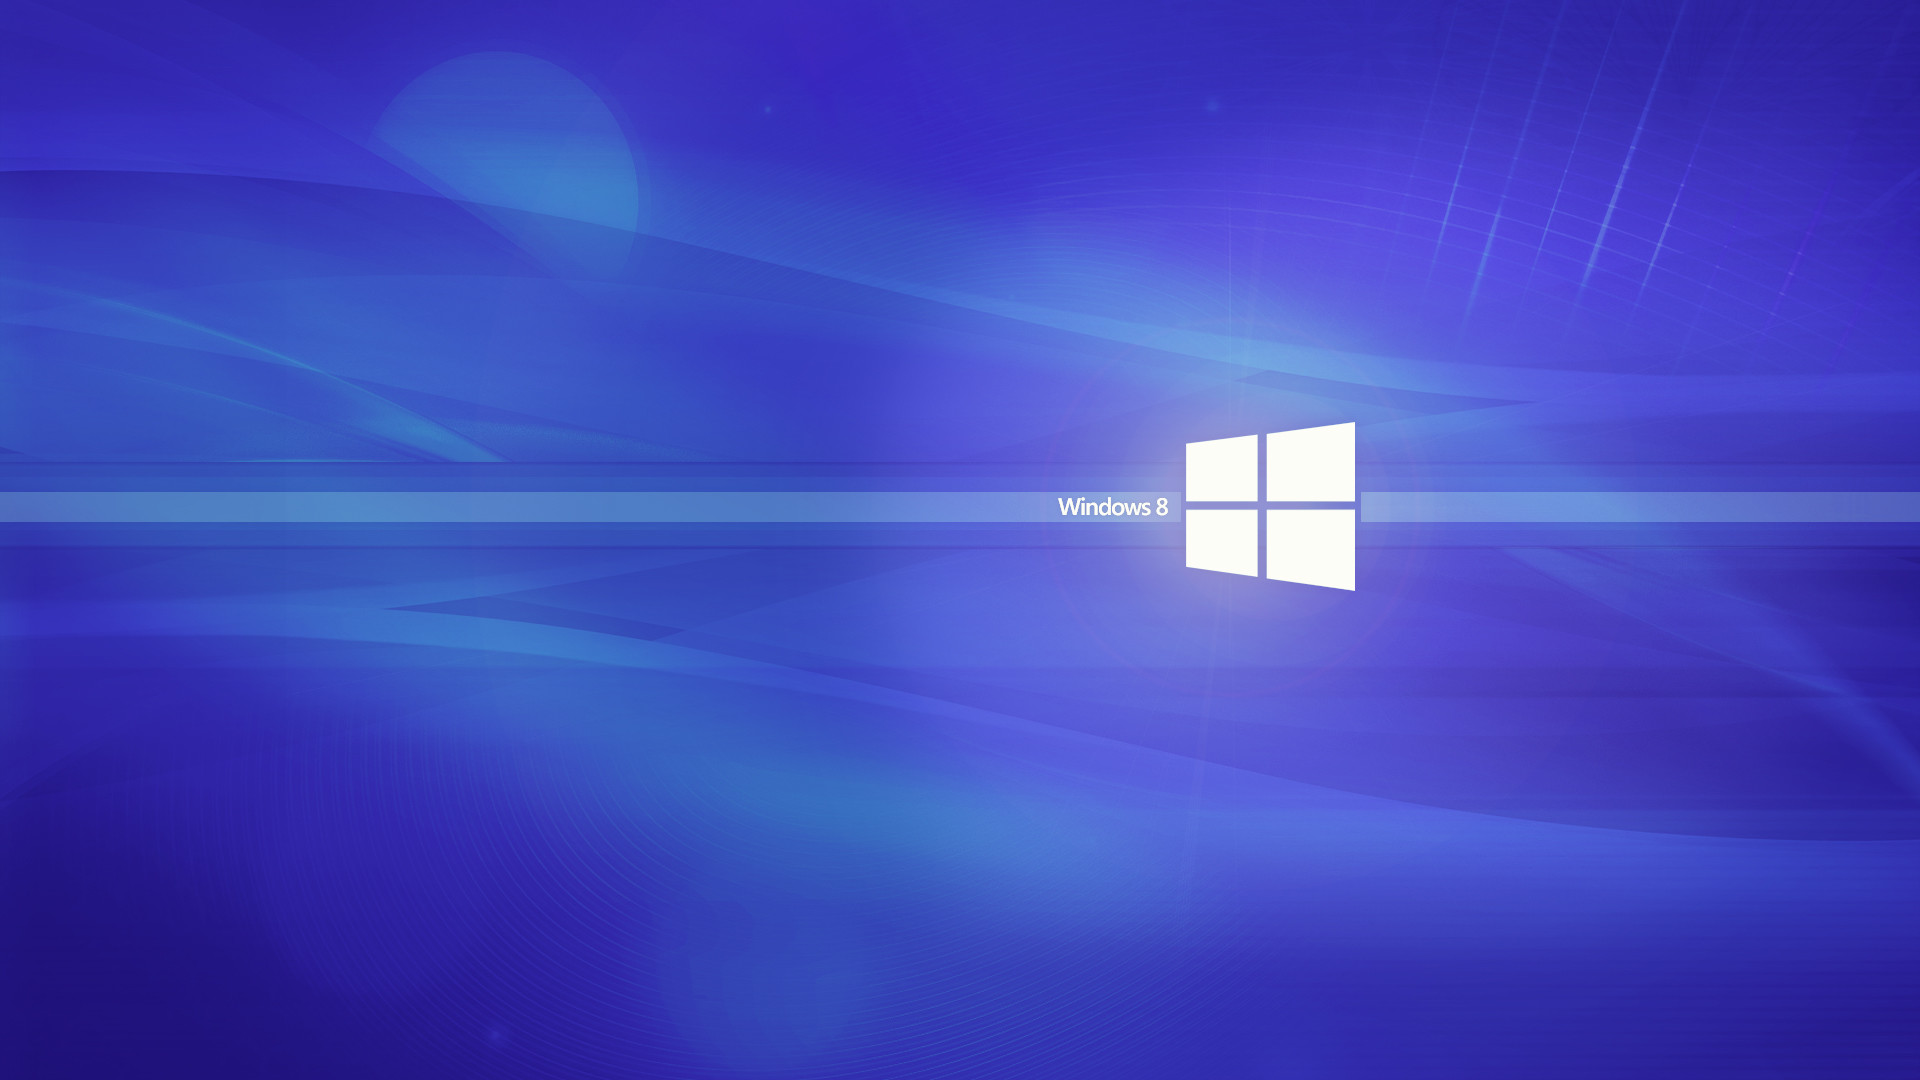 1920x1080 Windows 8 HD Wallpaper | Background Image |  | ID:637155 -  Wallpaper Abyss